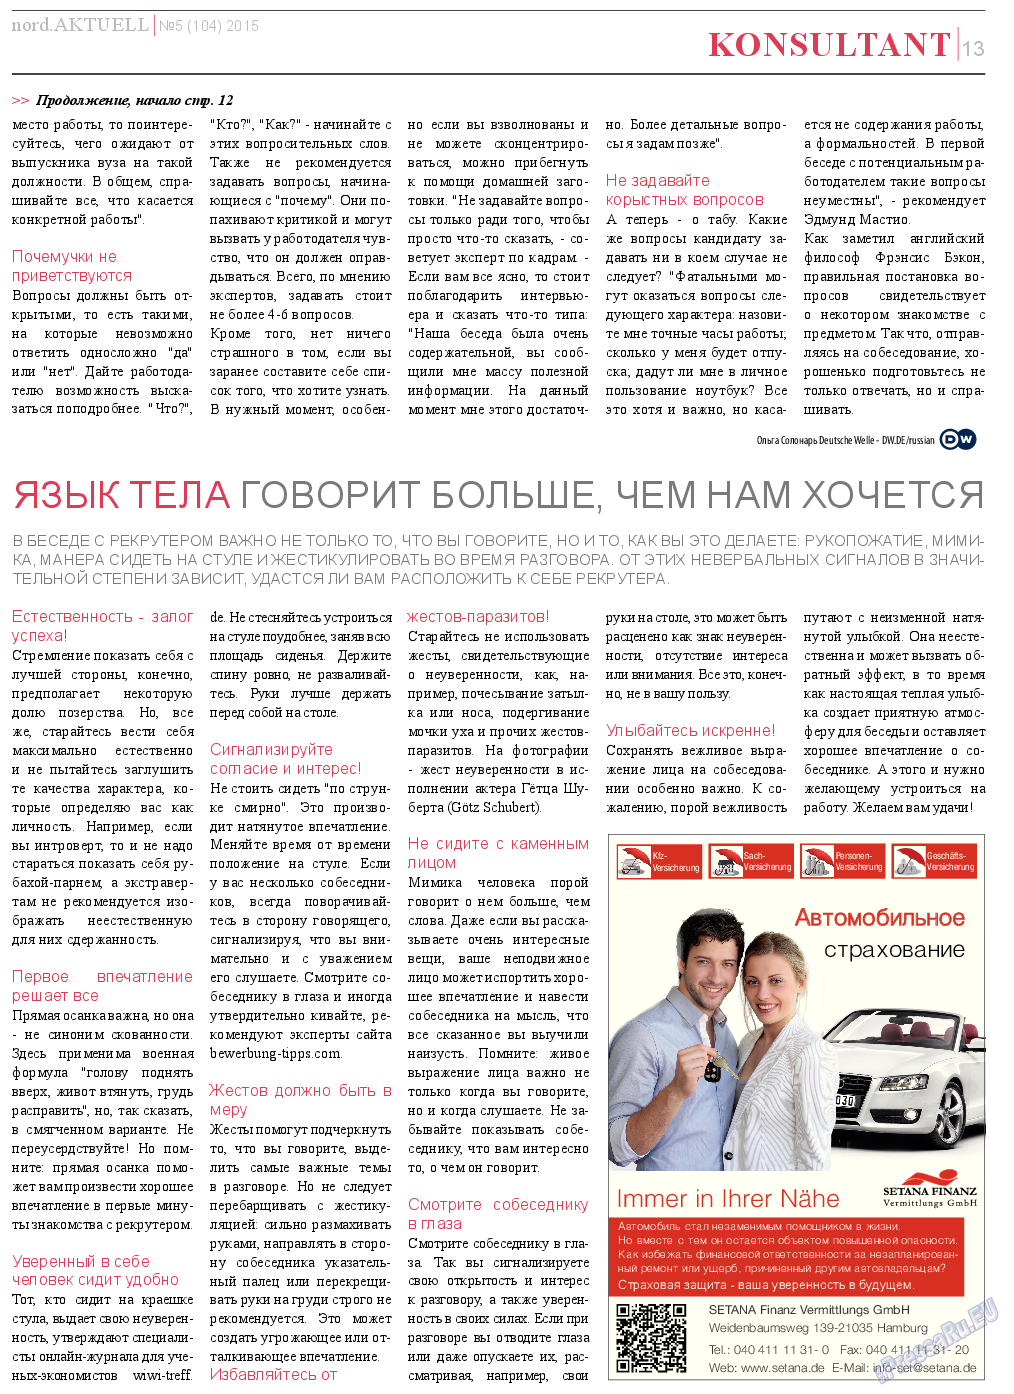 nord.Aktuell, газета. 2015 №5 стр.13